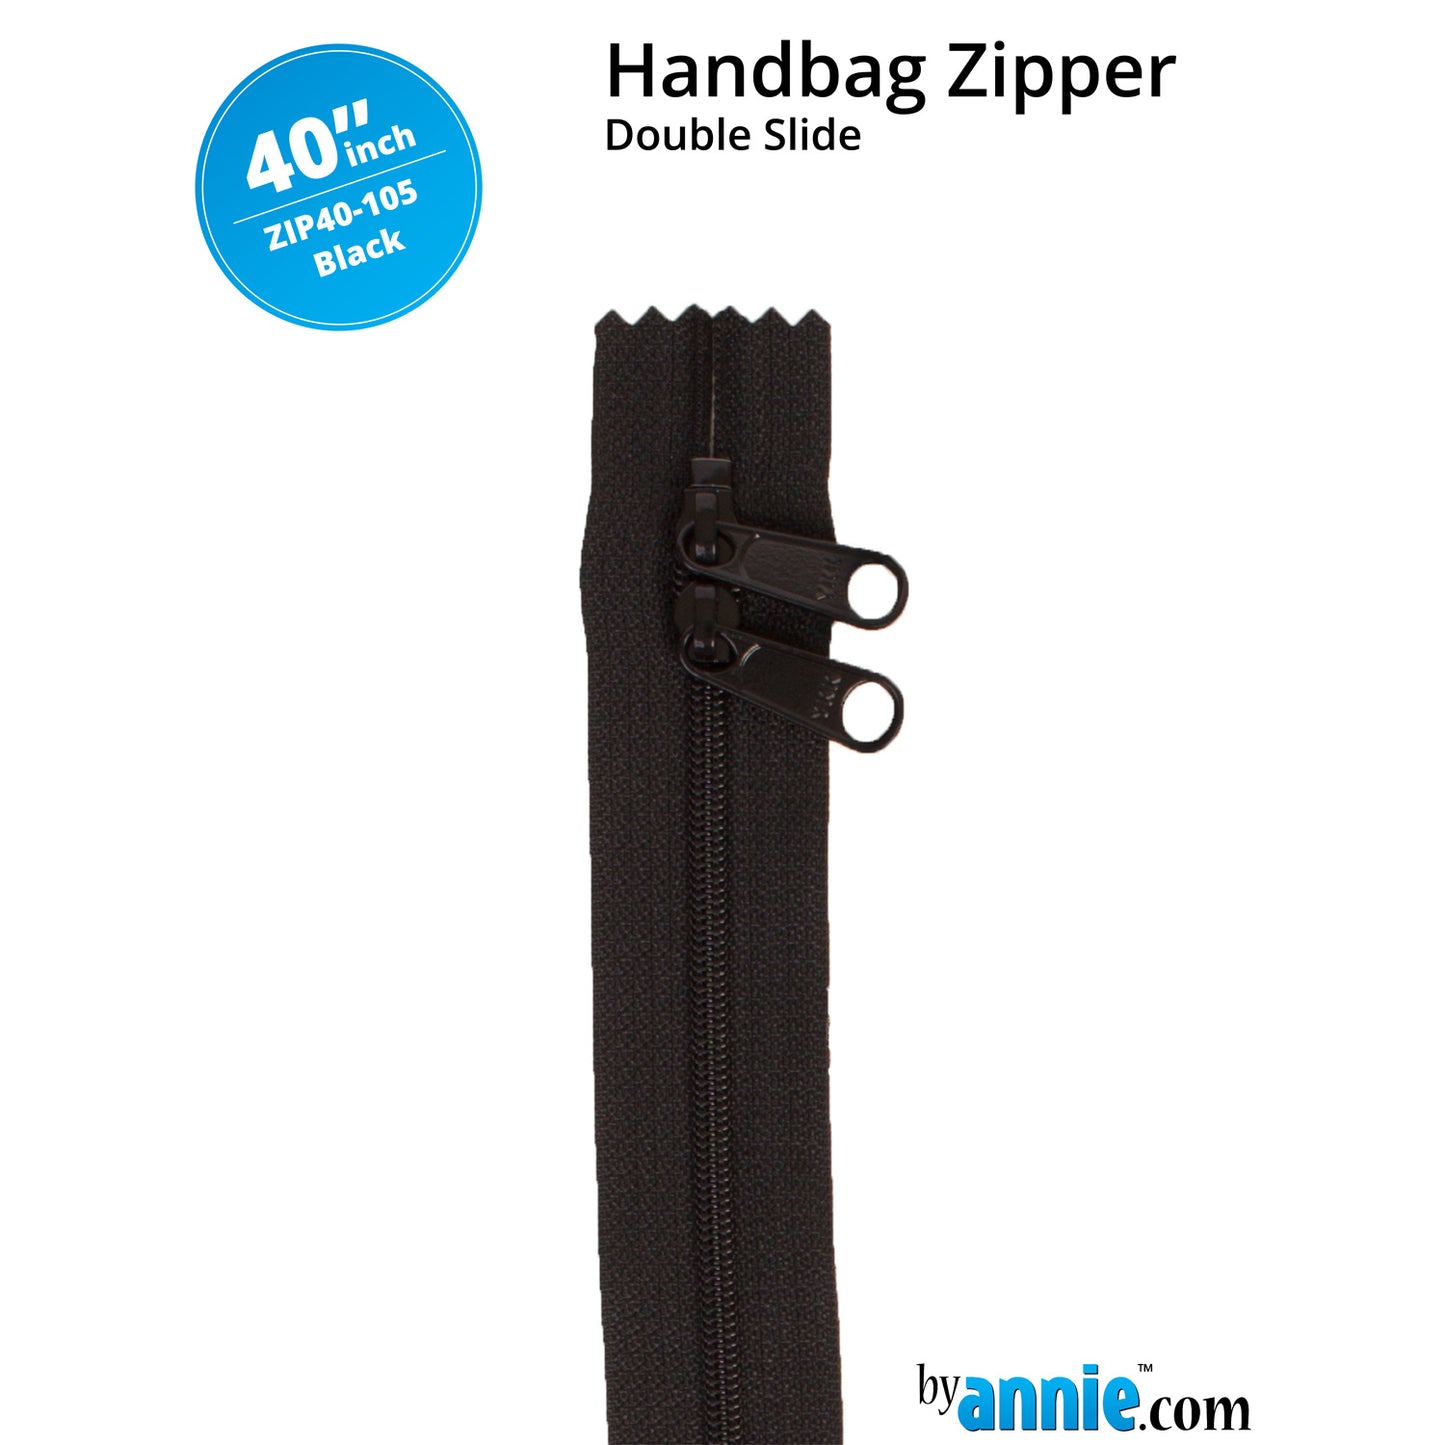 ByAnnie 40" Double Slide Zipper - Black Primary Image